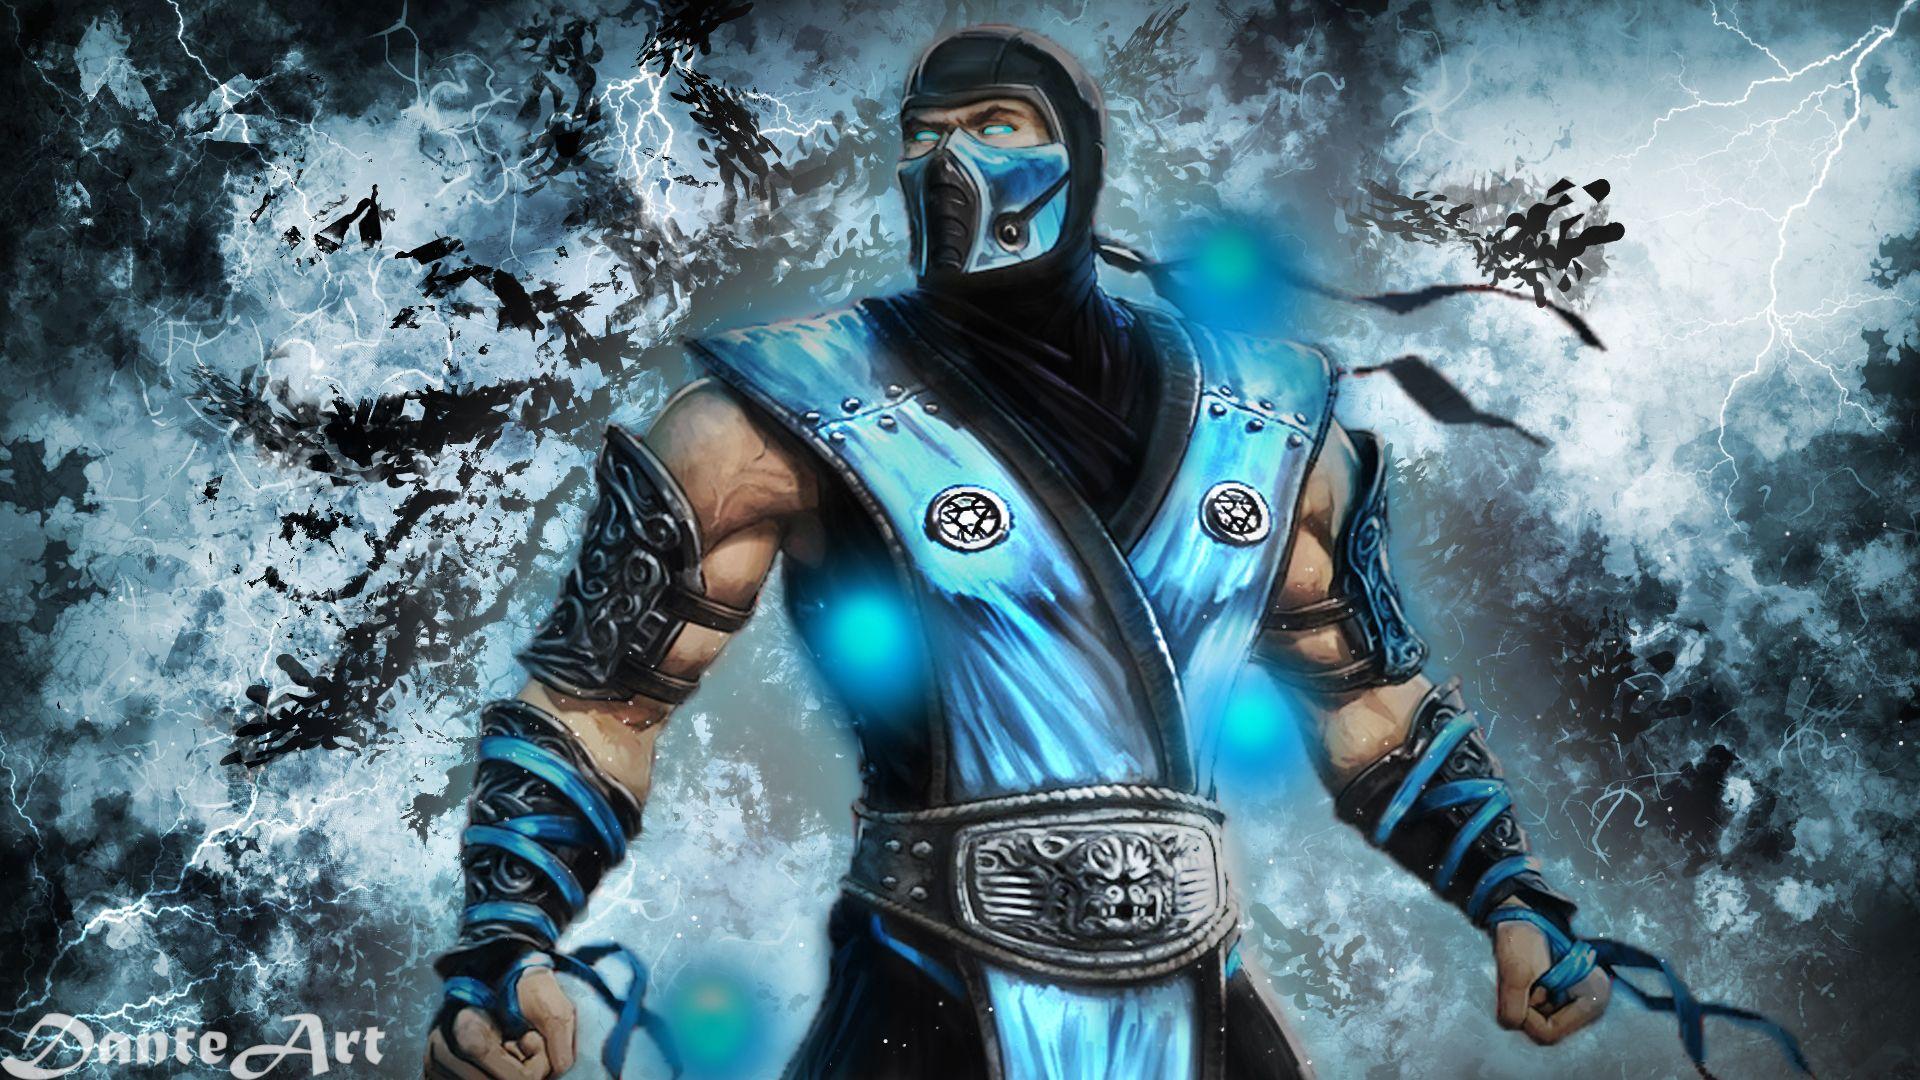 Mortal Kombat Wallpaper, HDQ Mortal Kombat Image Collection